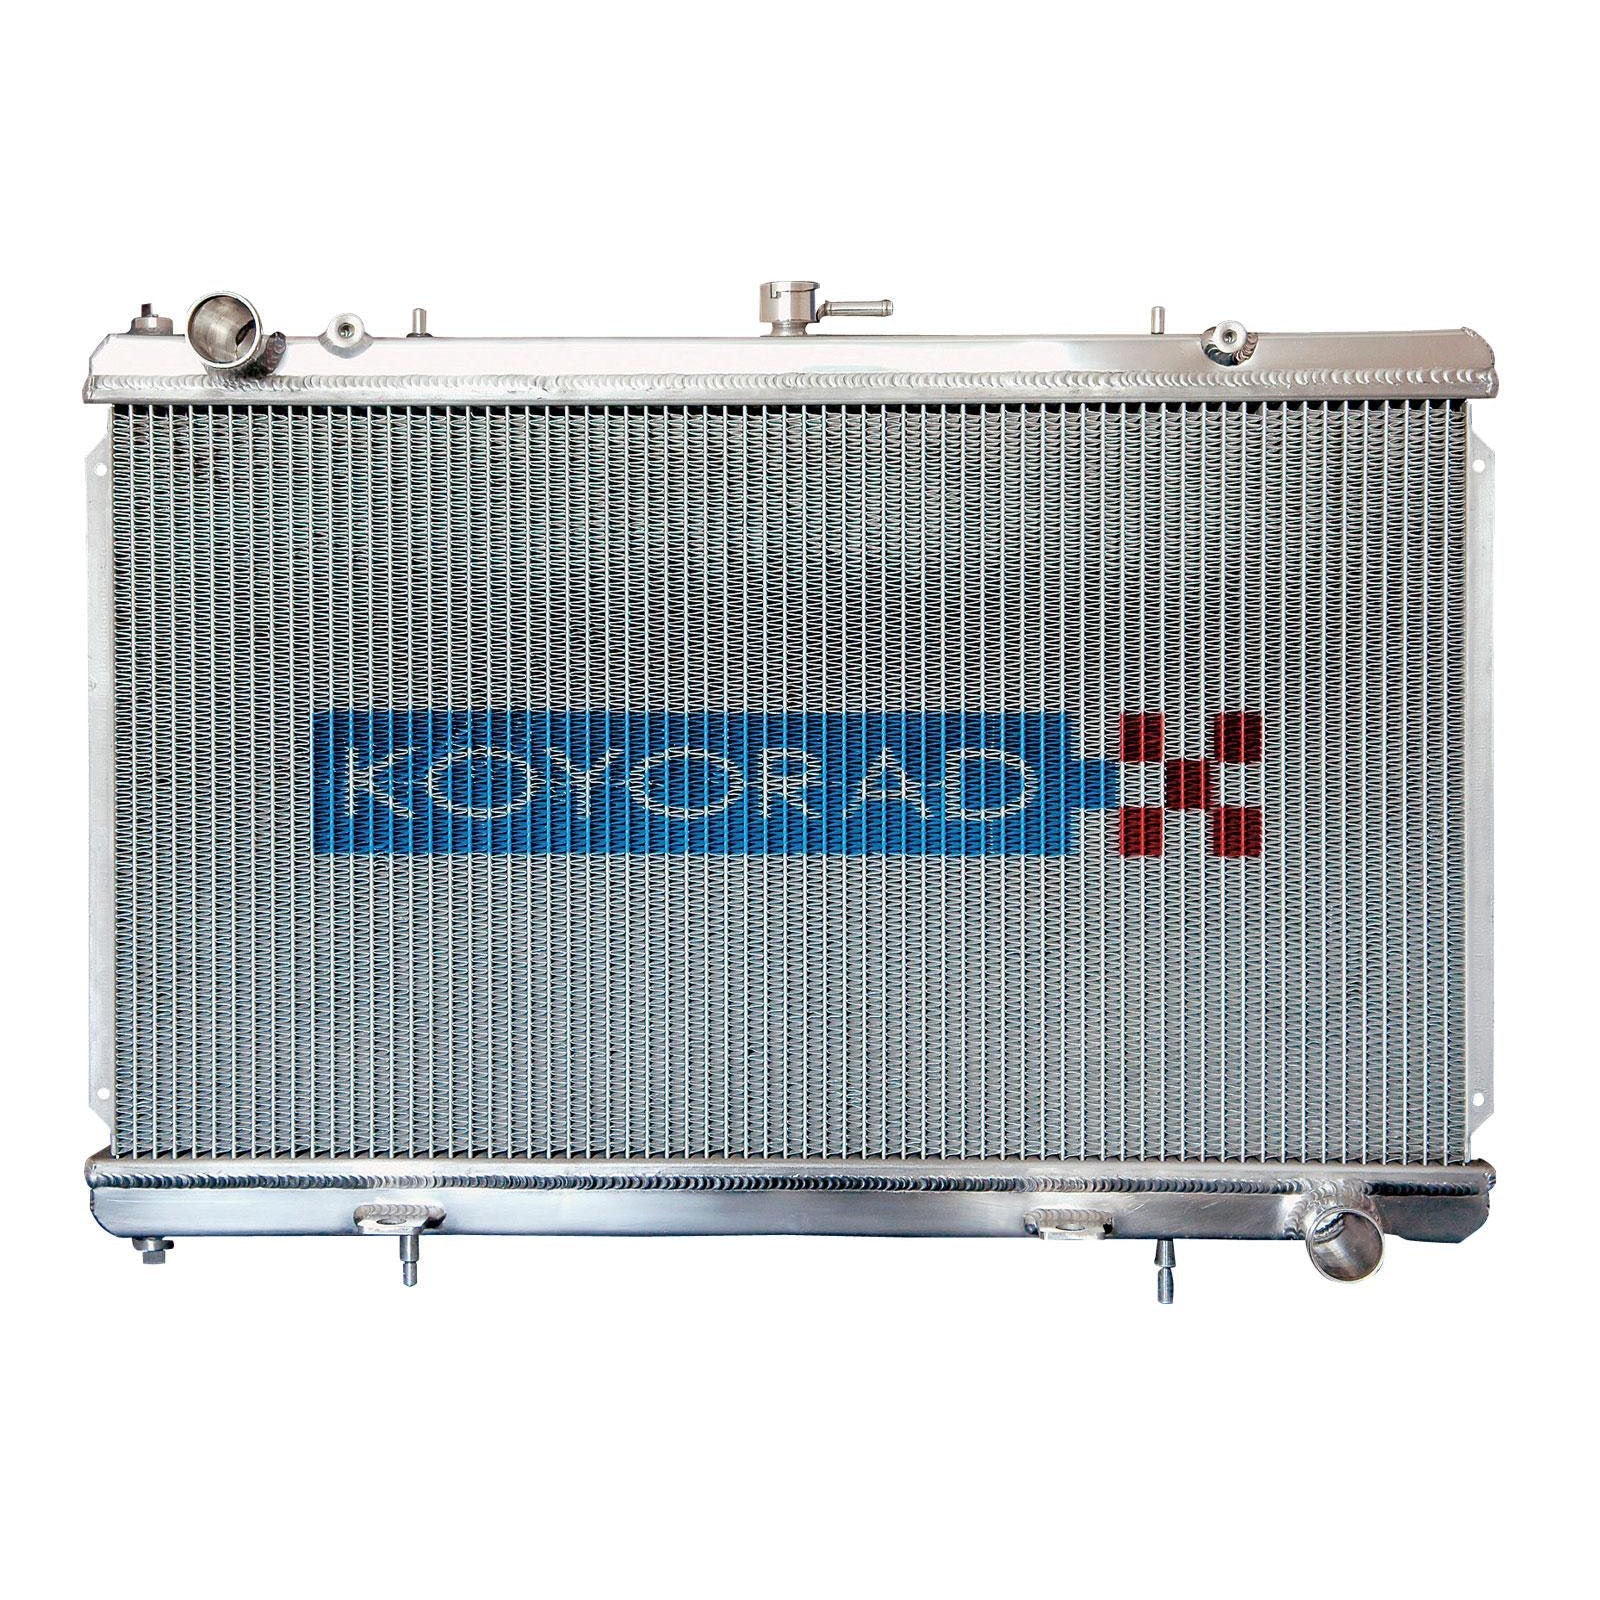 Koyo Aluminum Radiator 2004-2008 Forester XT (MT)